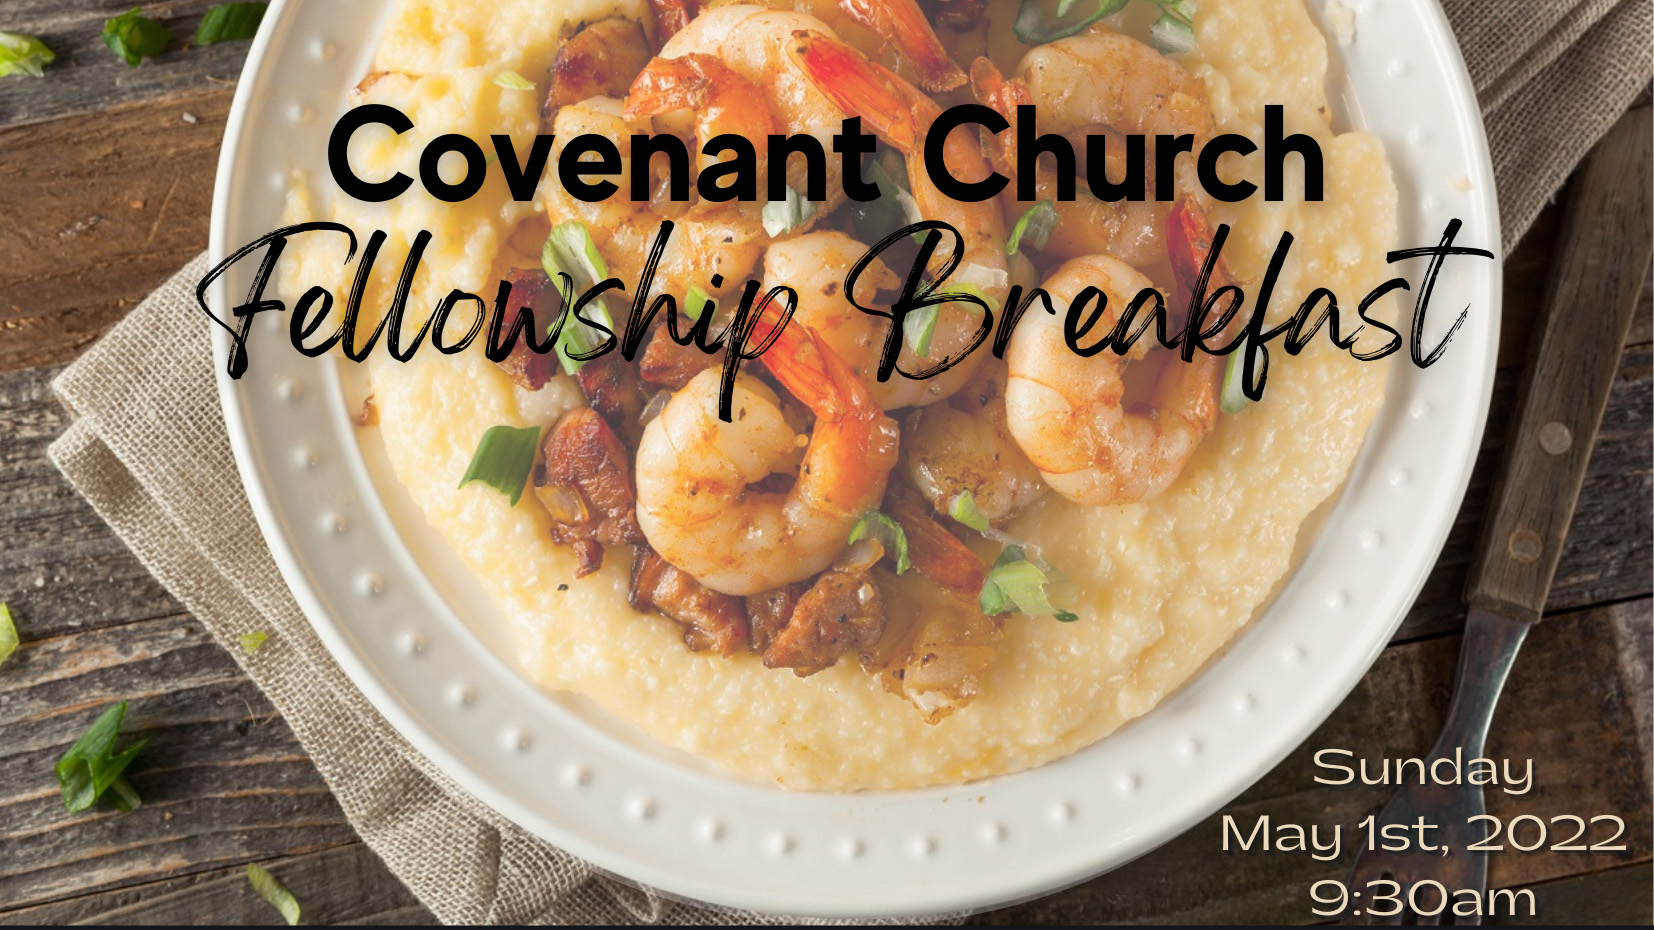 Covenant Church Fellowship Breakfast